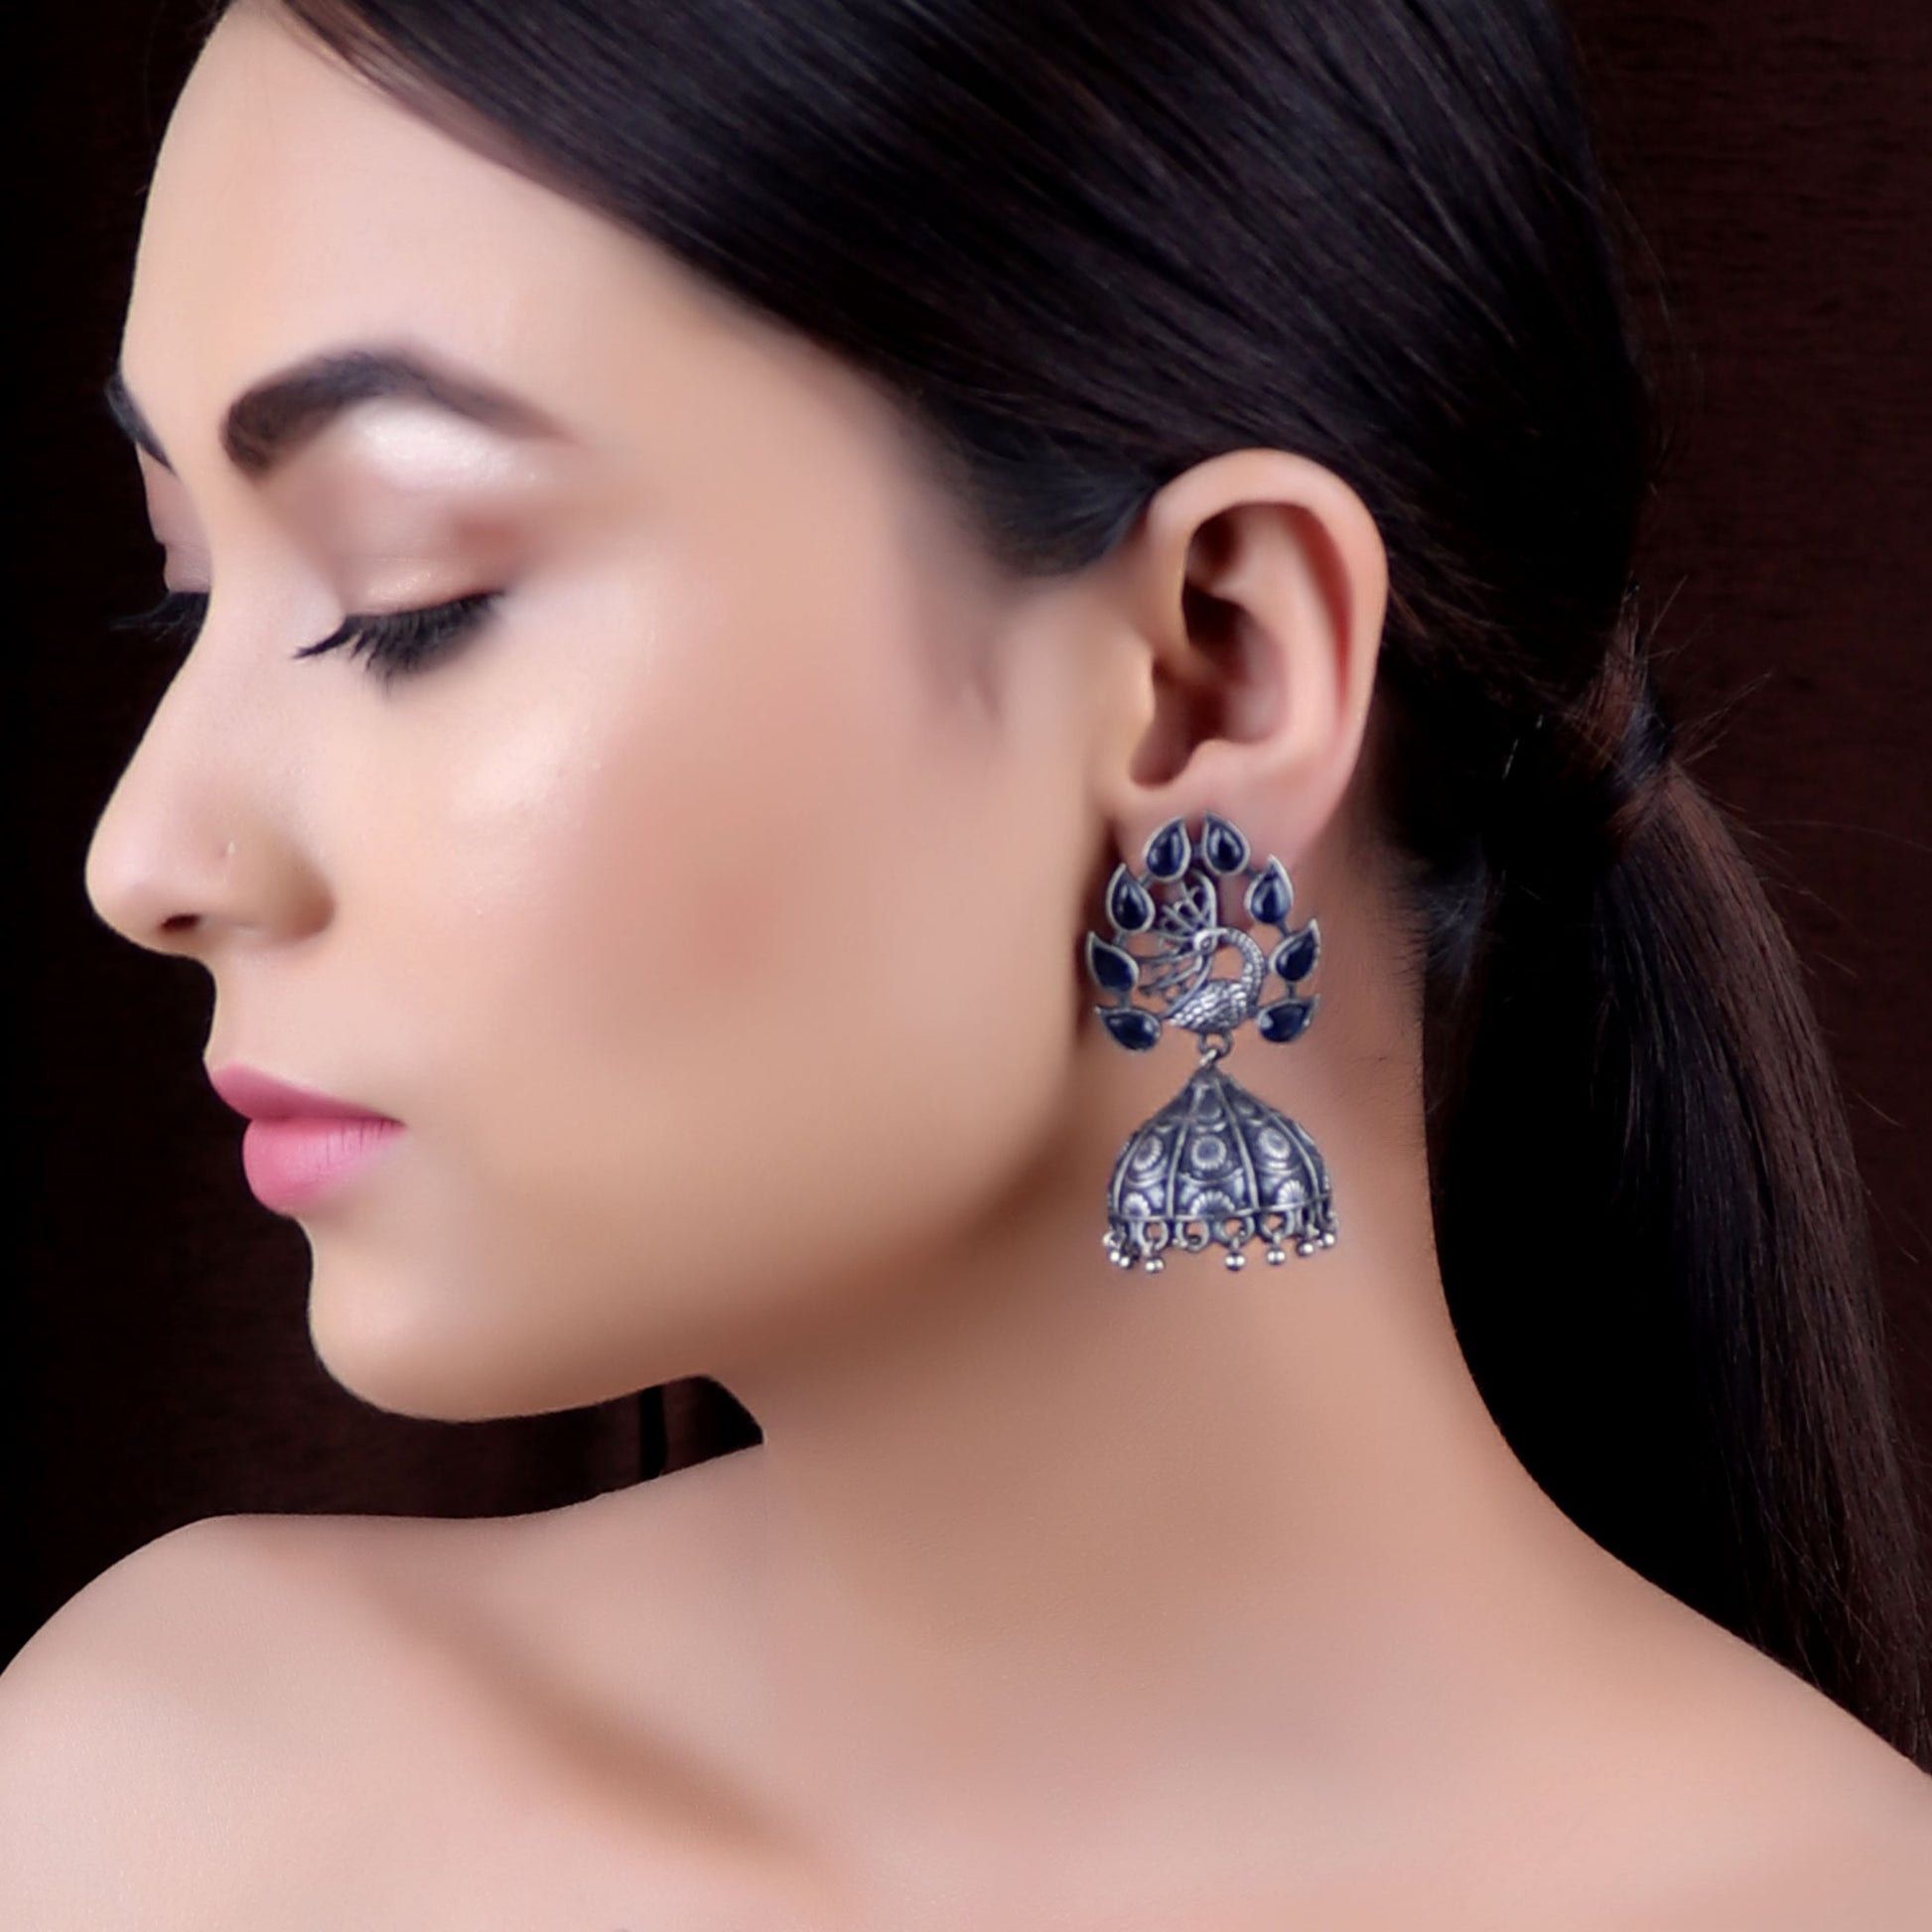 Earrings,The Shah Jahan Peacock Silver Look Alike Earring - Cippele Multi Store